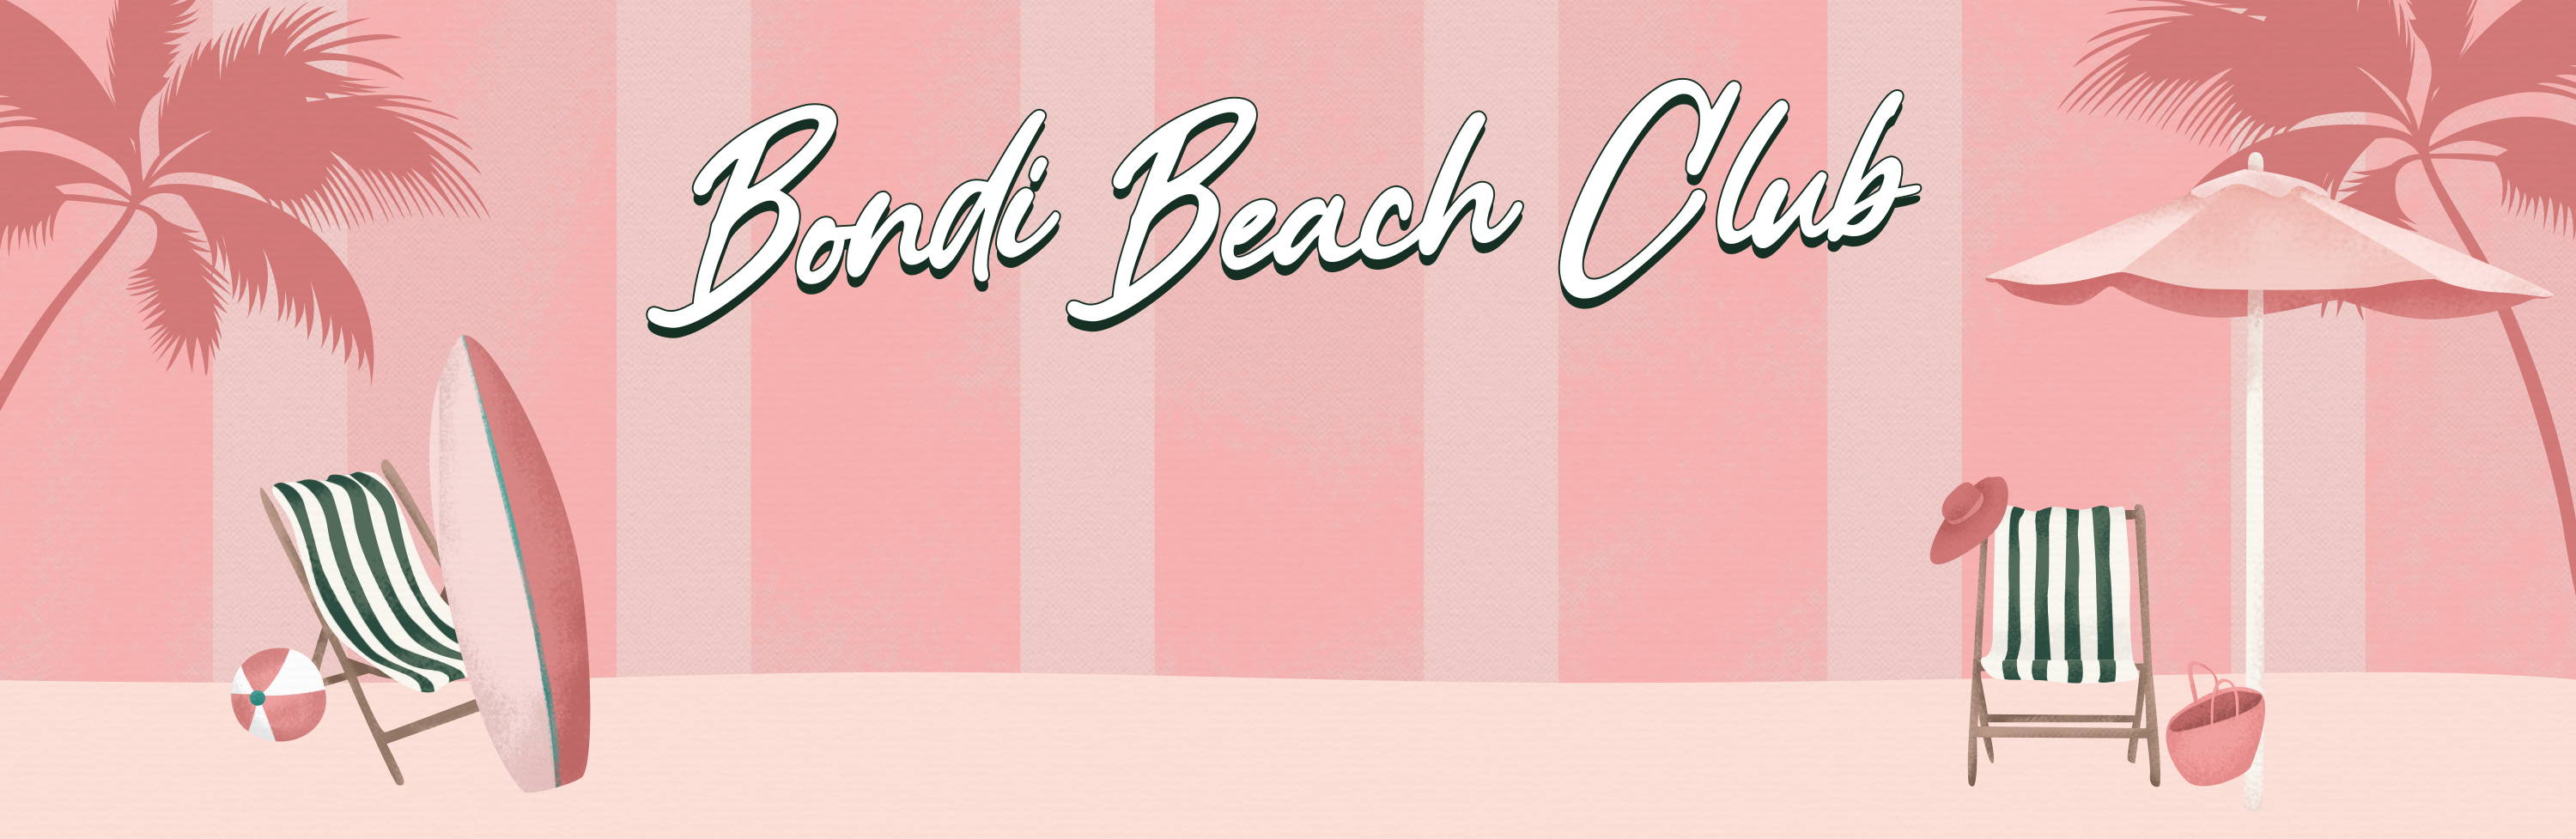 Join Bondi Beach Club